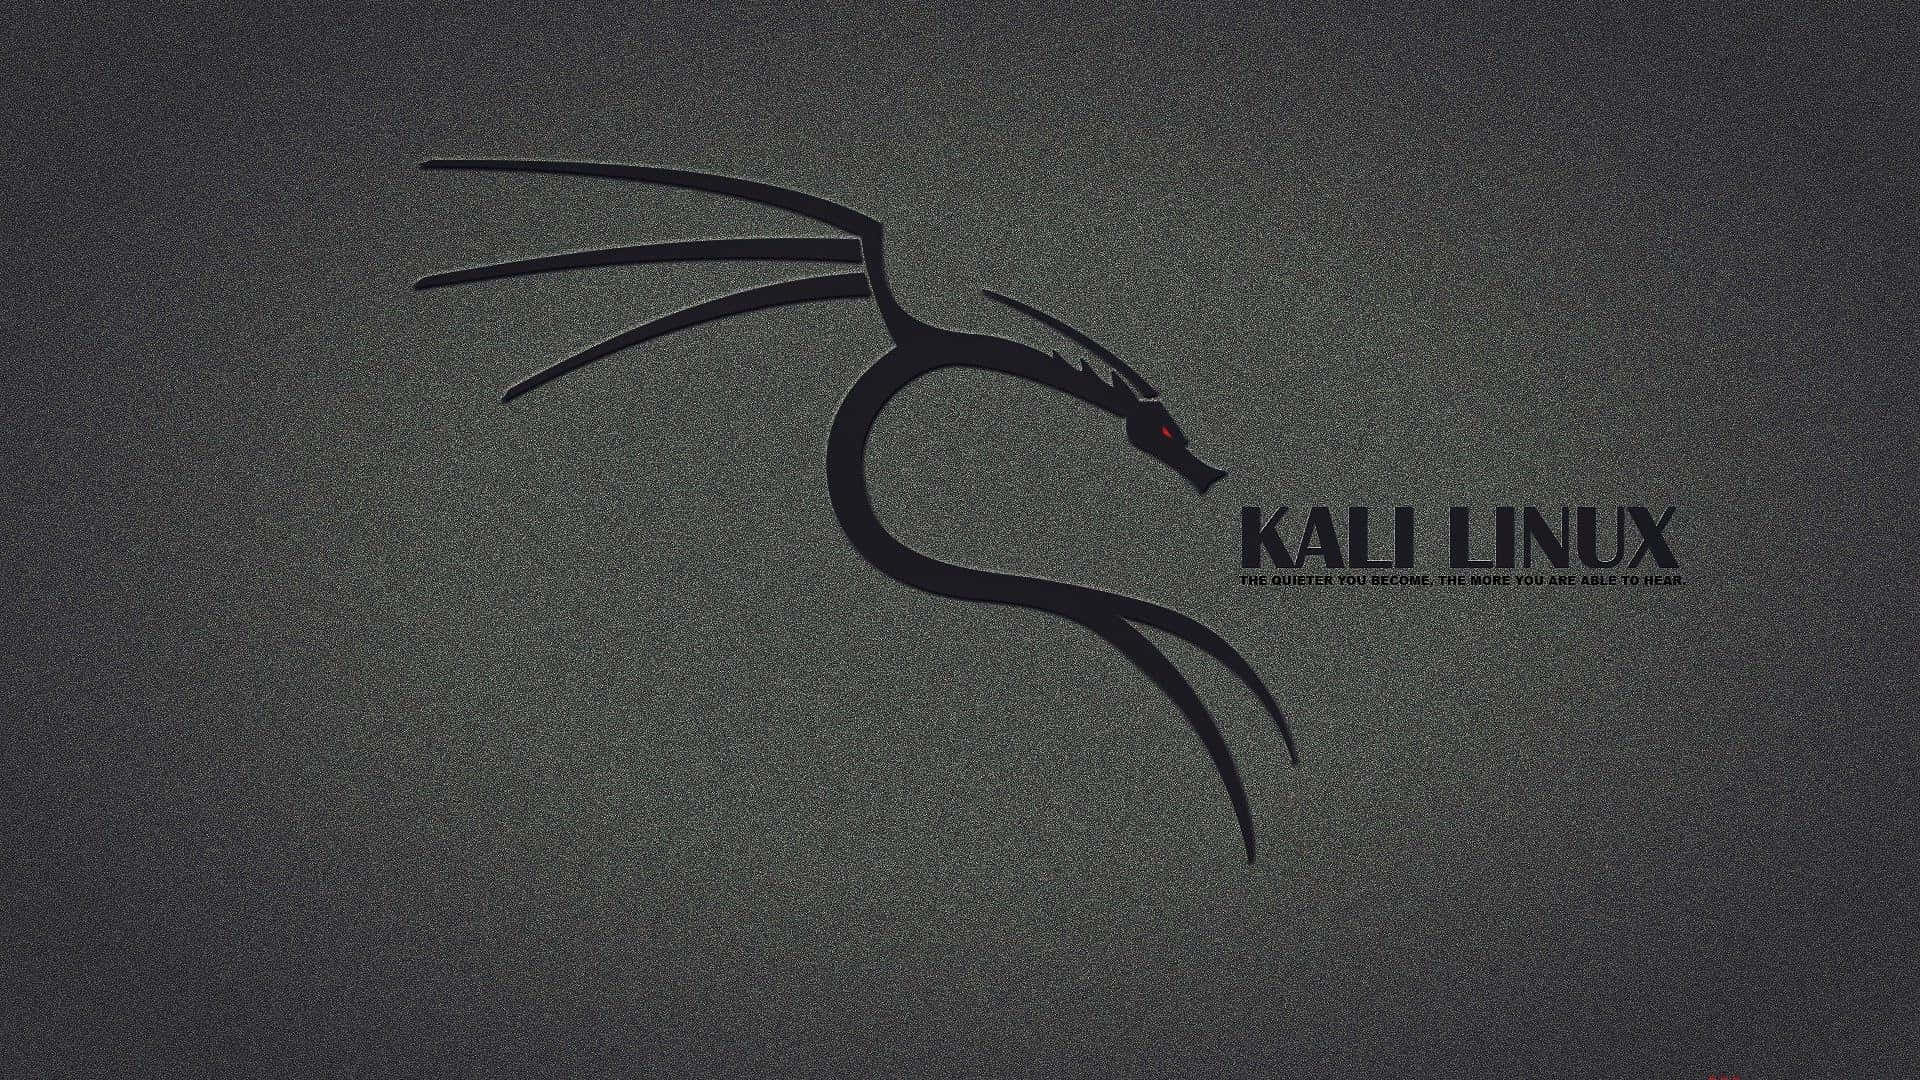 An awe-inspiring photo of Kali Linux graphical interface